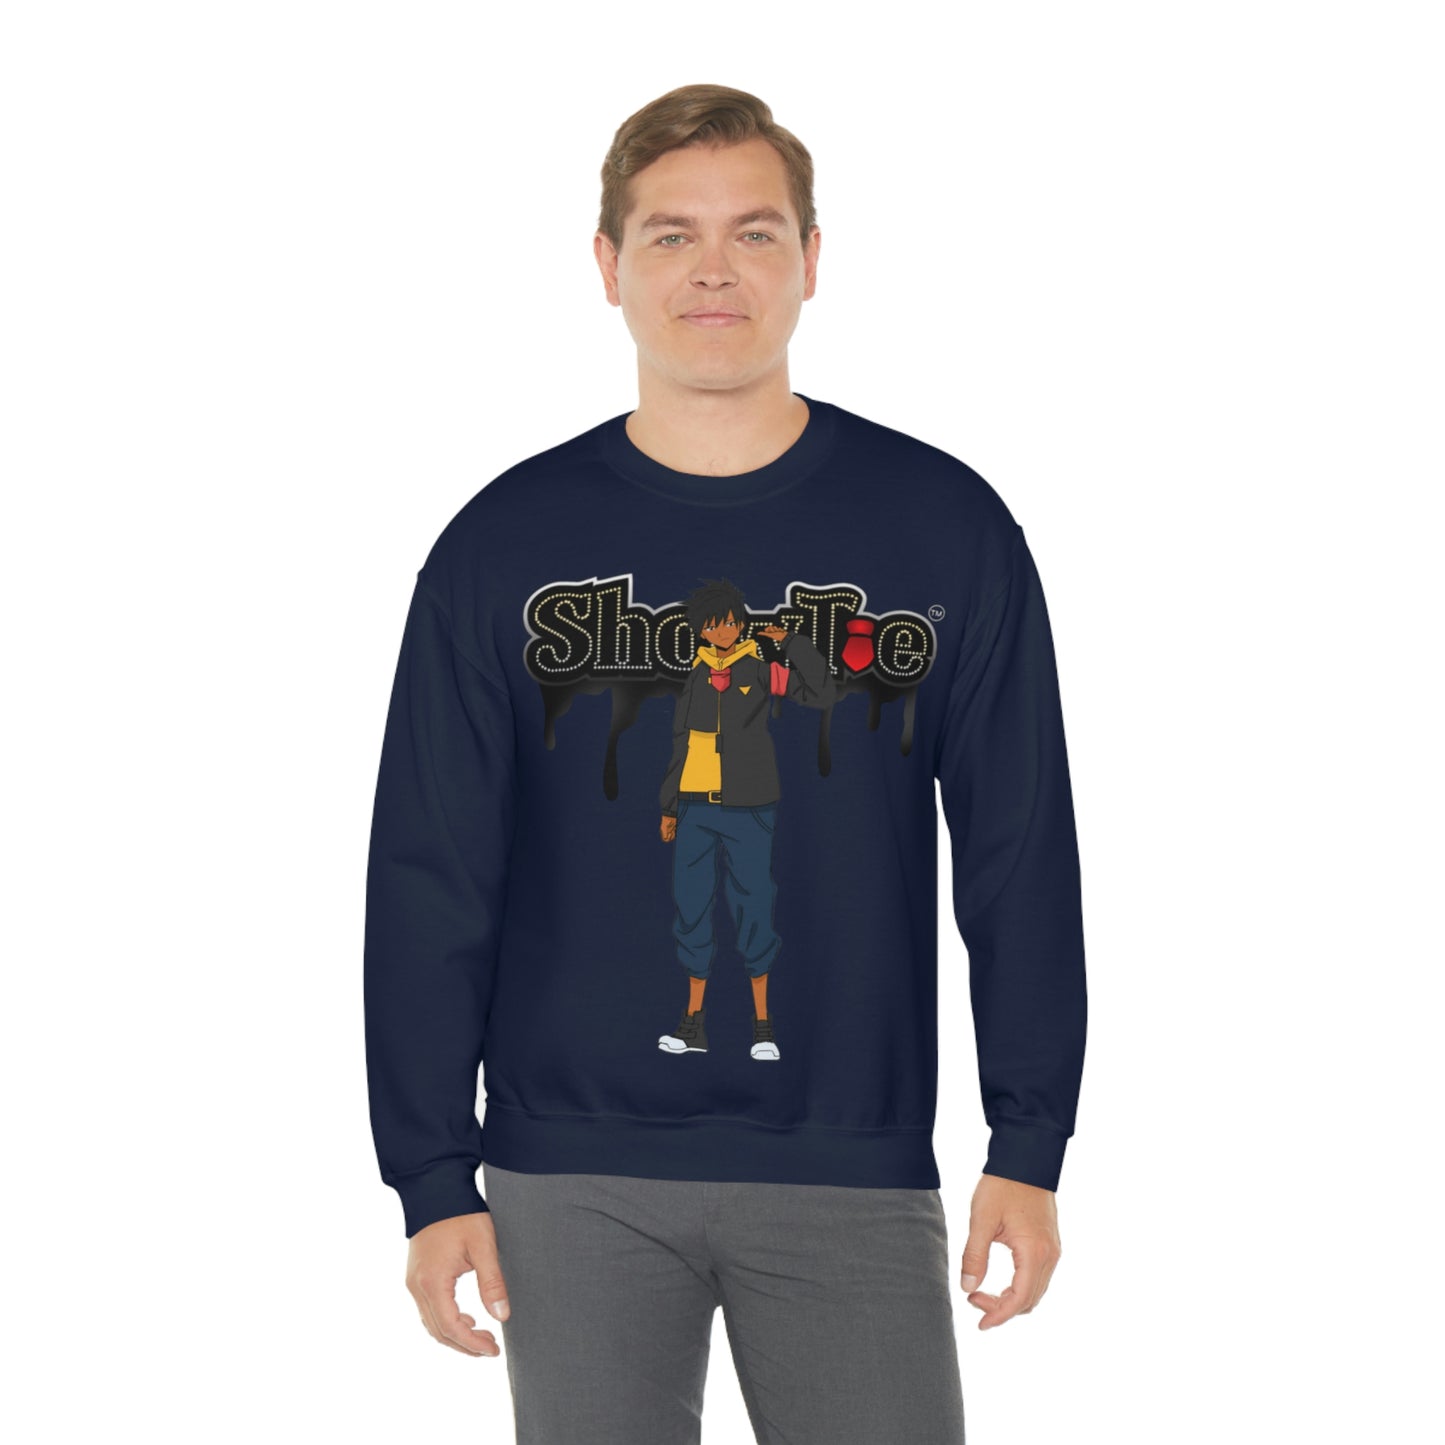 Showtie Dripster Sweatshirt